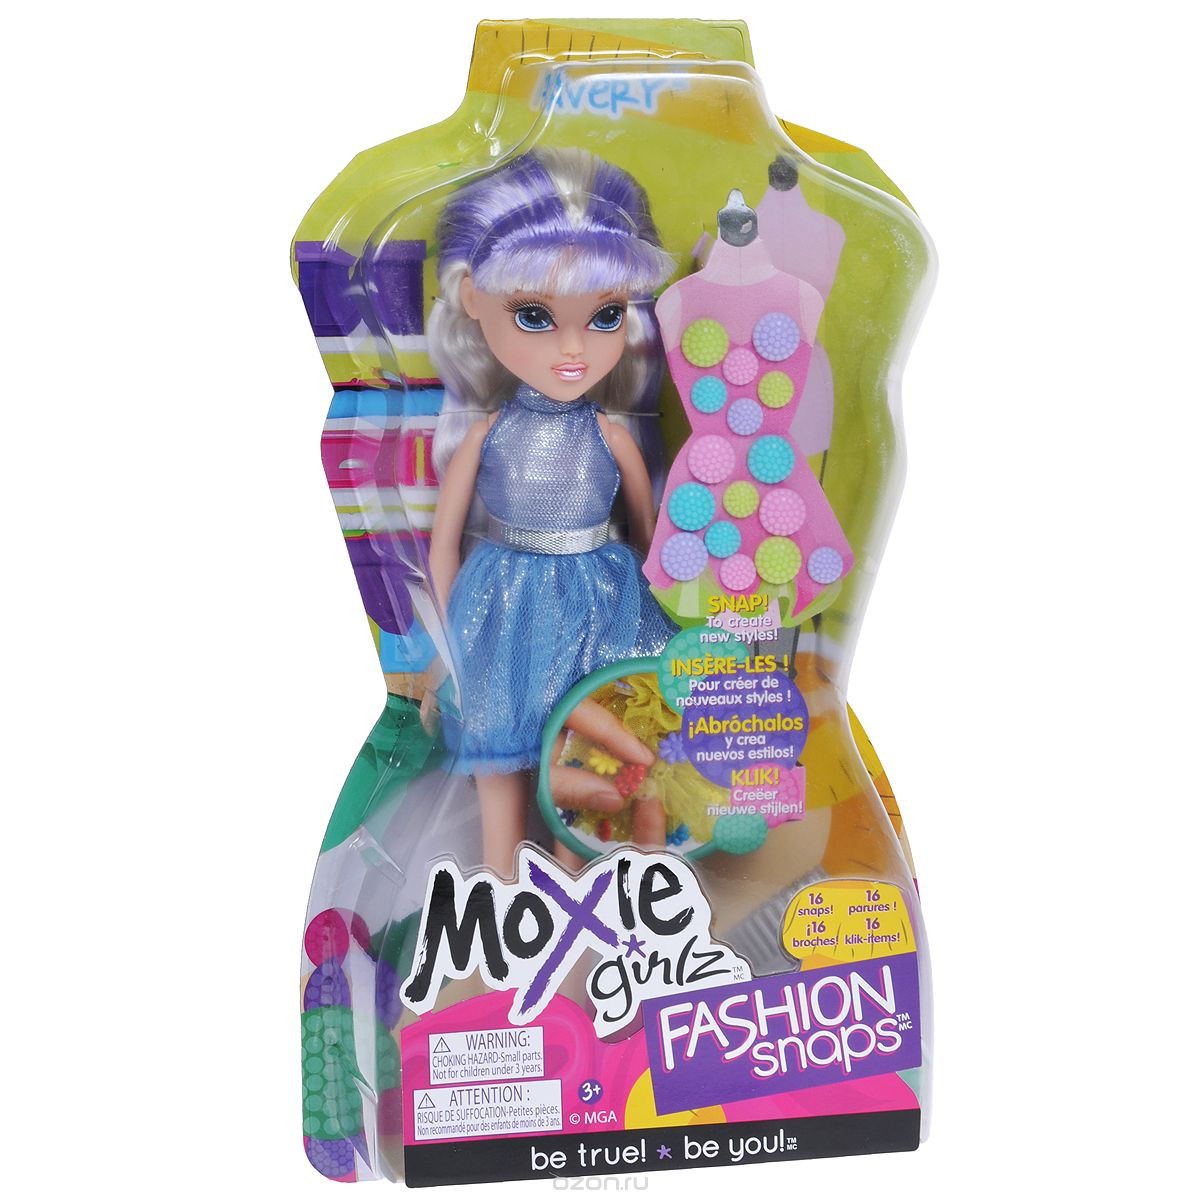 503187E4C Moxie Girlz Модное платье - Эйвери, фото 1